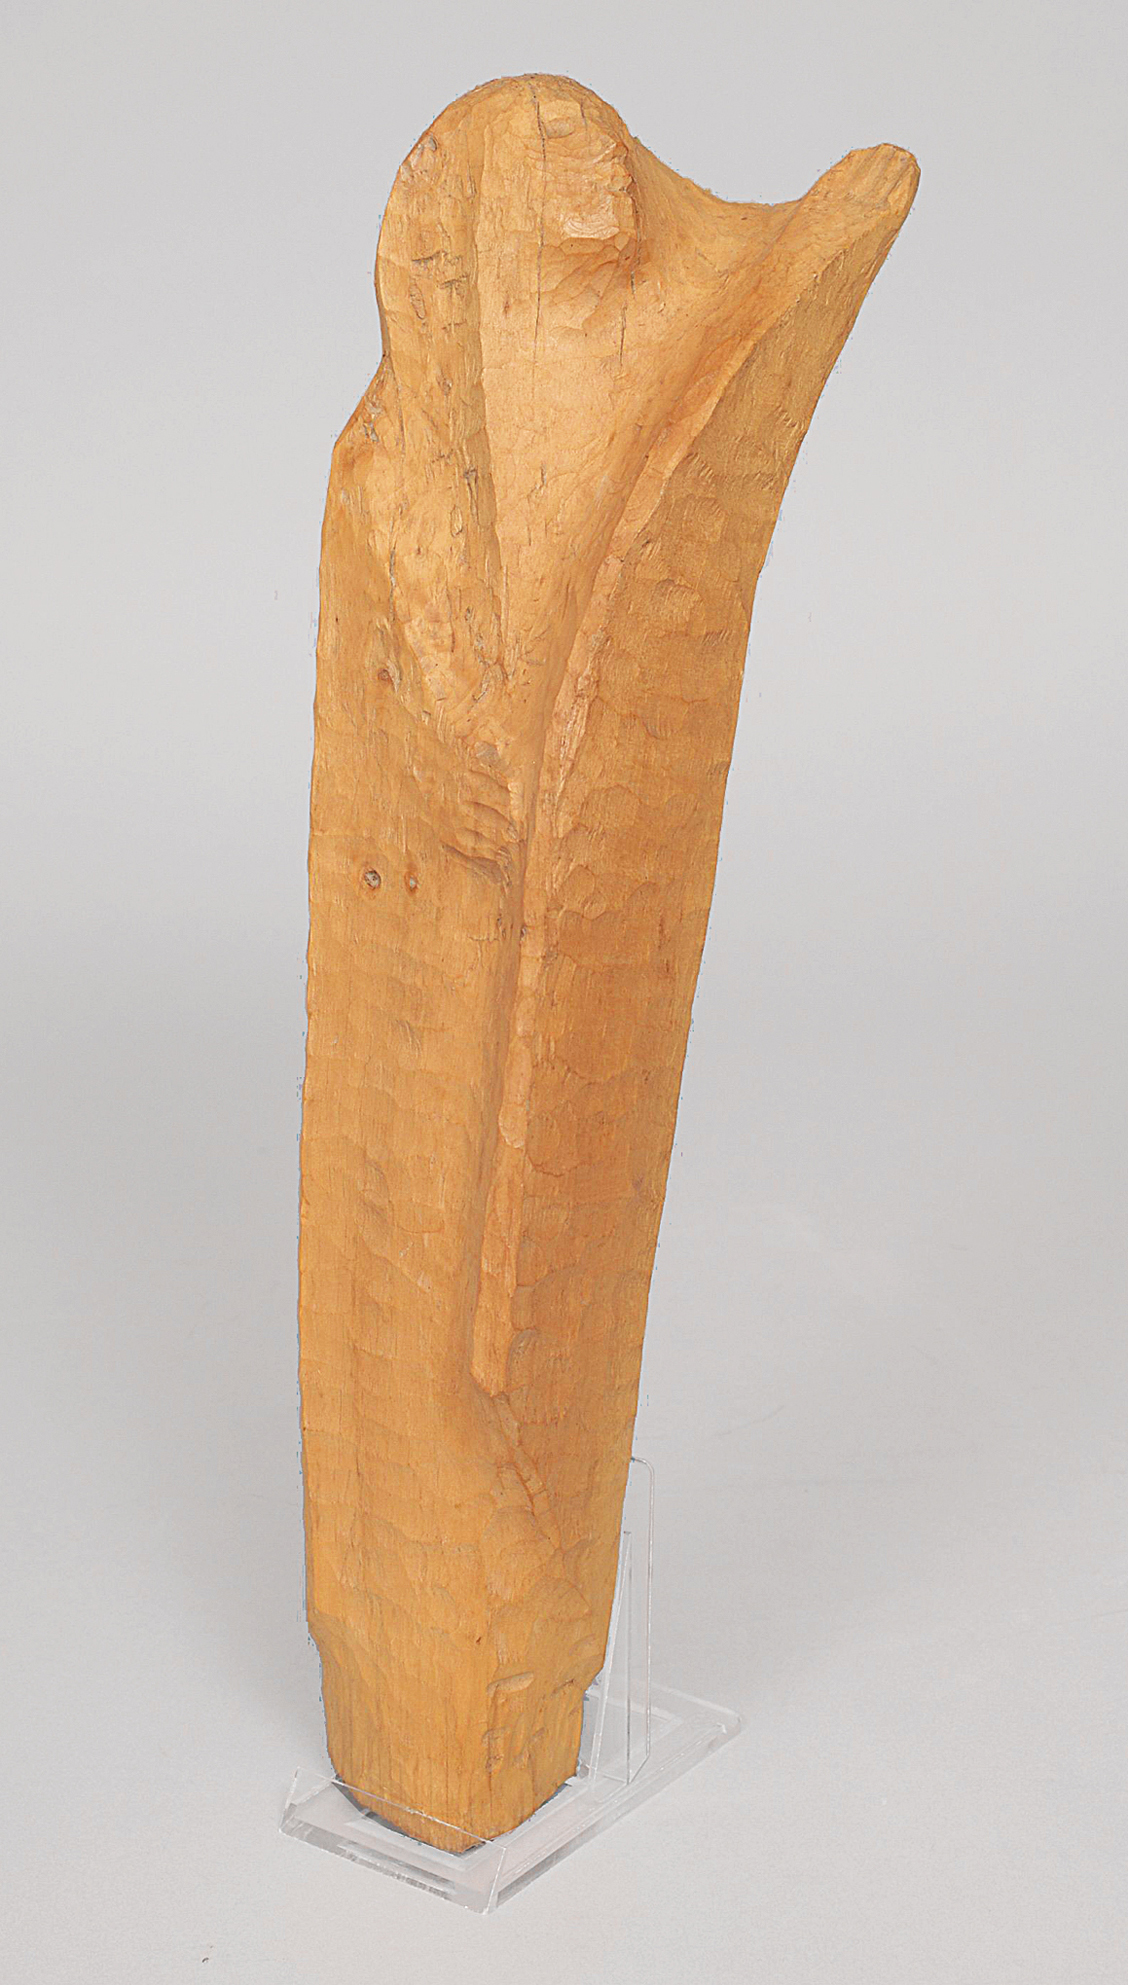 A wood sculpture of a woman